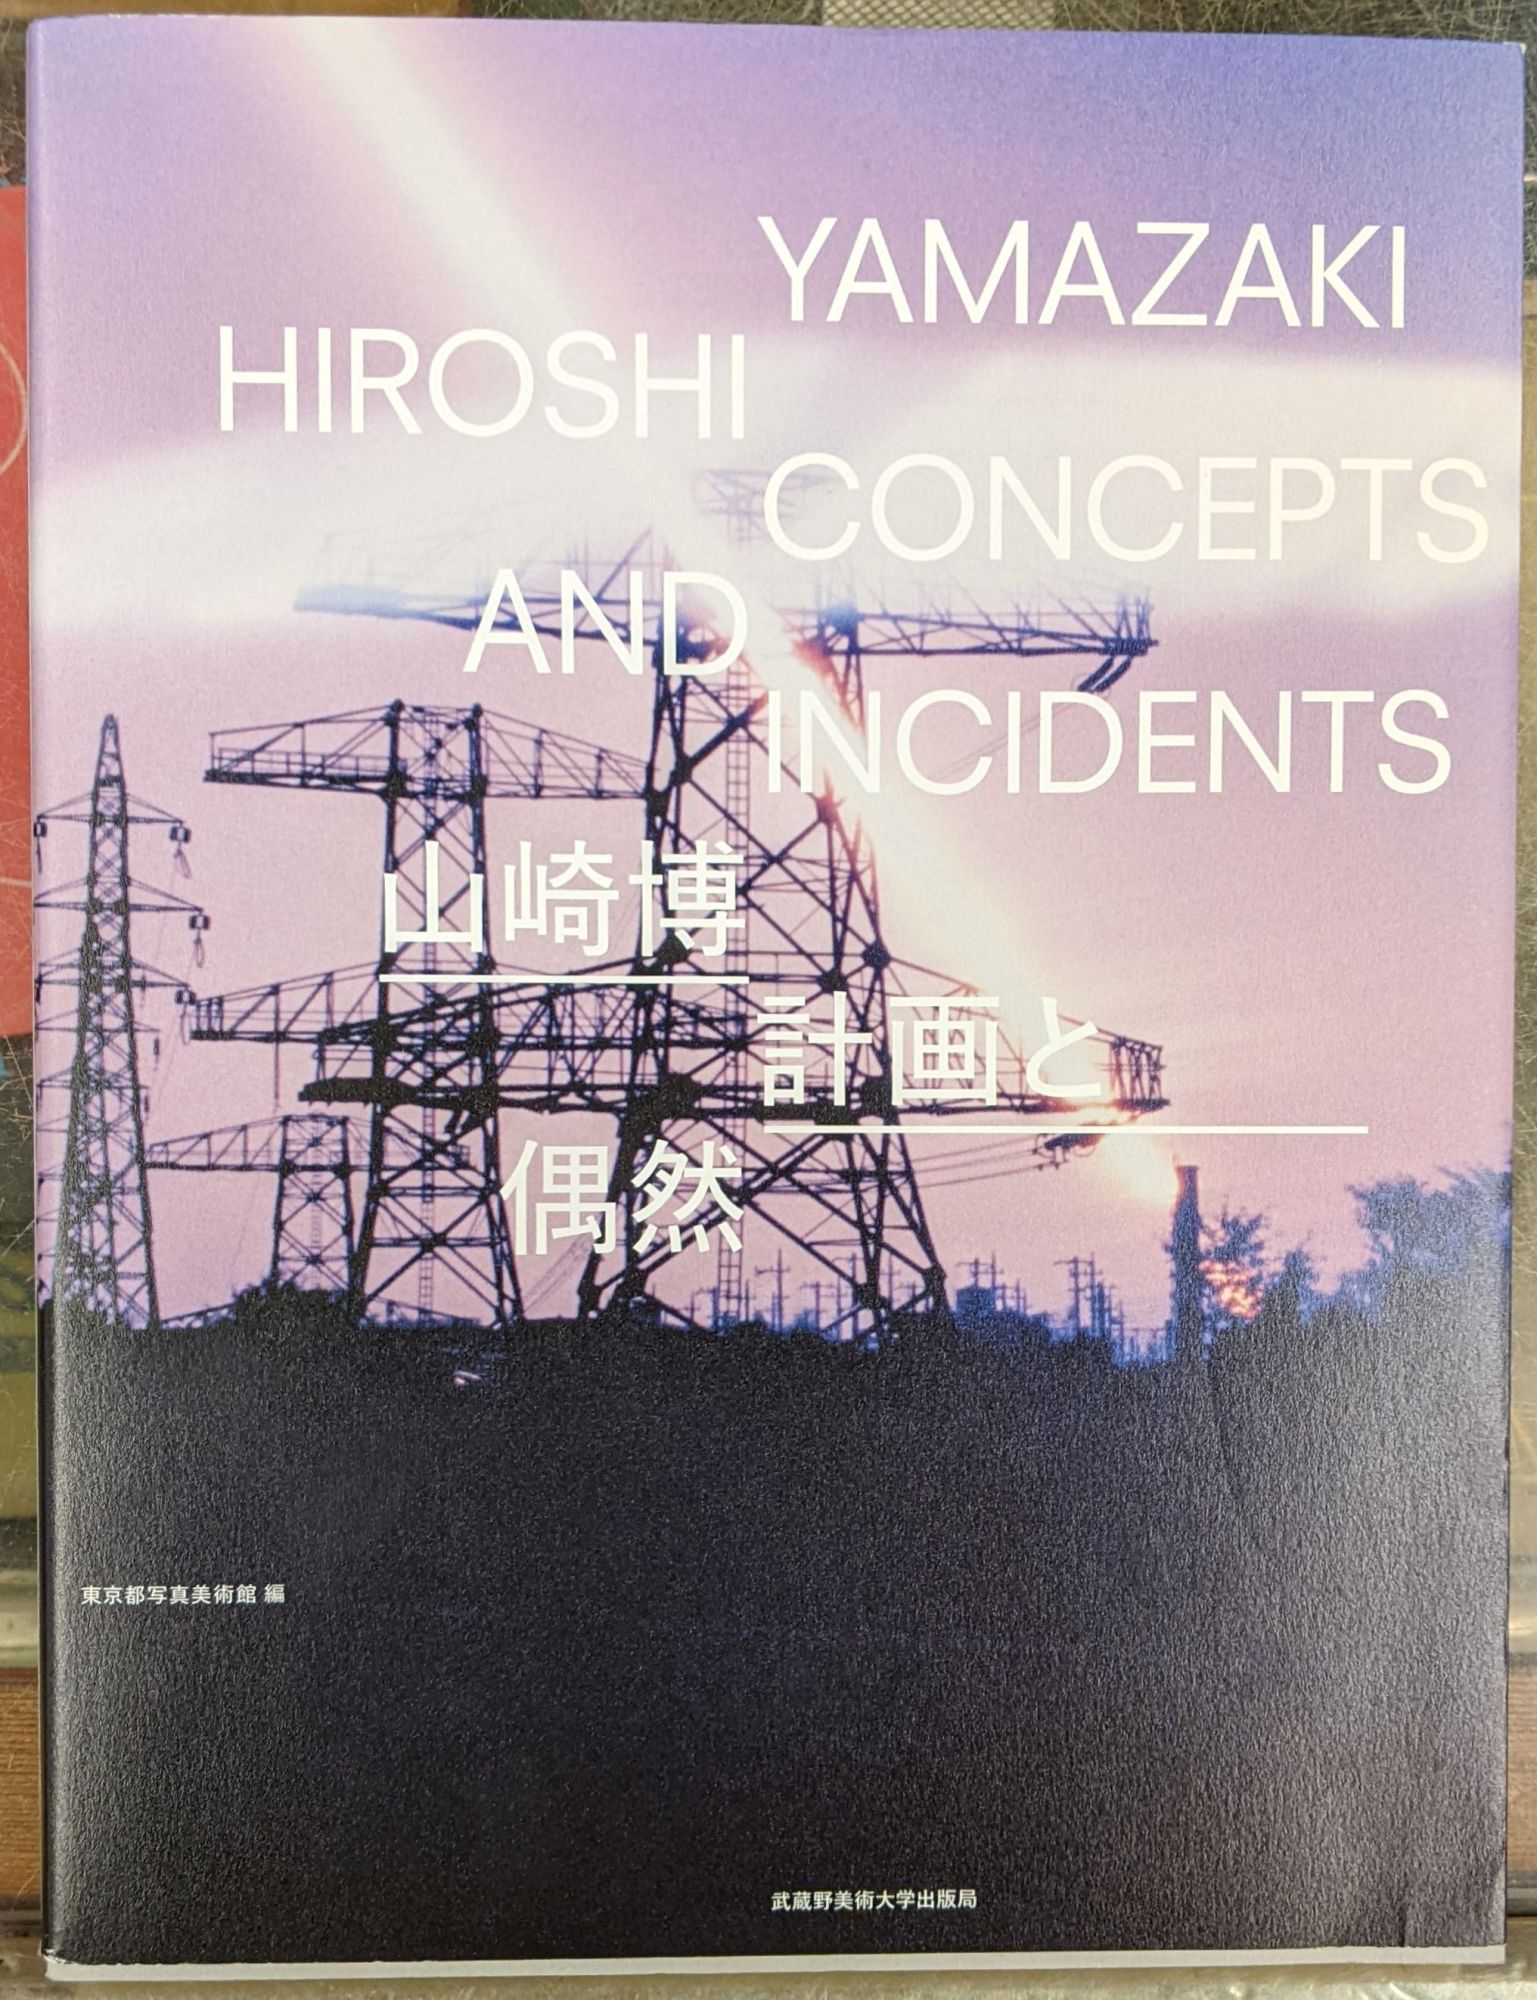 Yamazaki Hiroshi / Concepts and Incidents: A Retrospective from the Late  Sixties Onwards by Hiroshi Yamazaki on Moe's Books